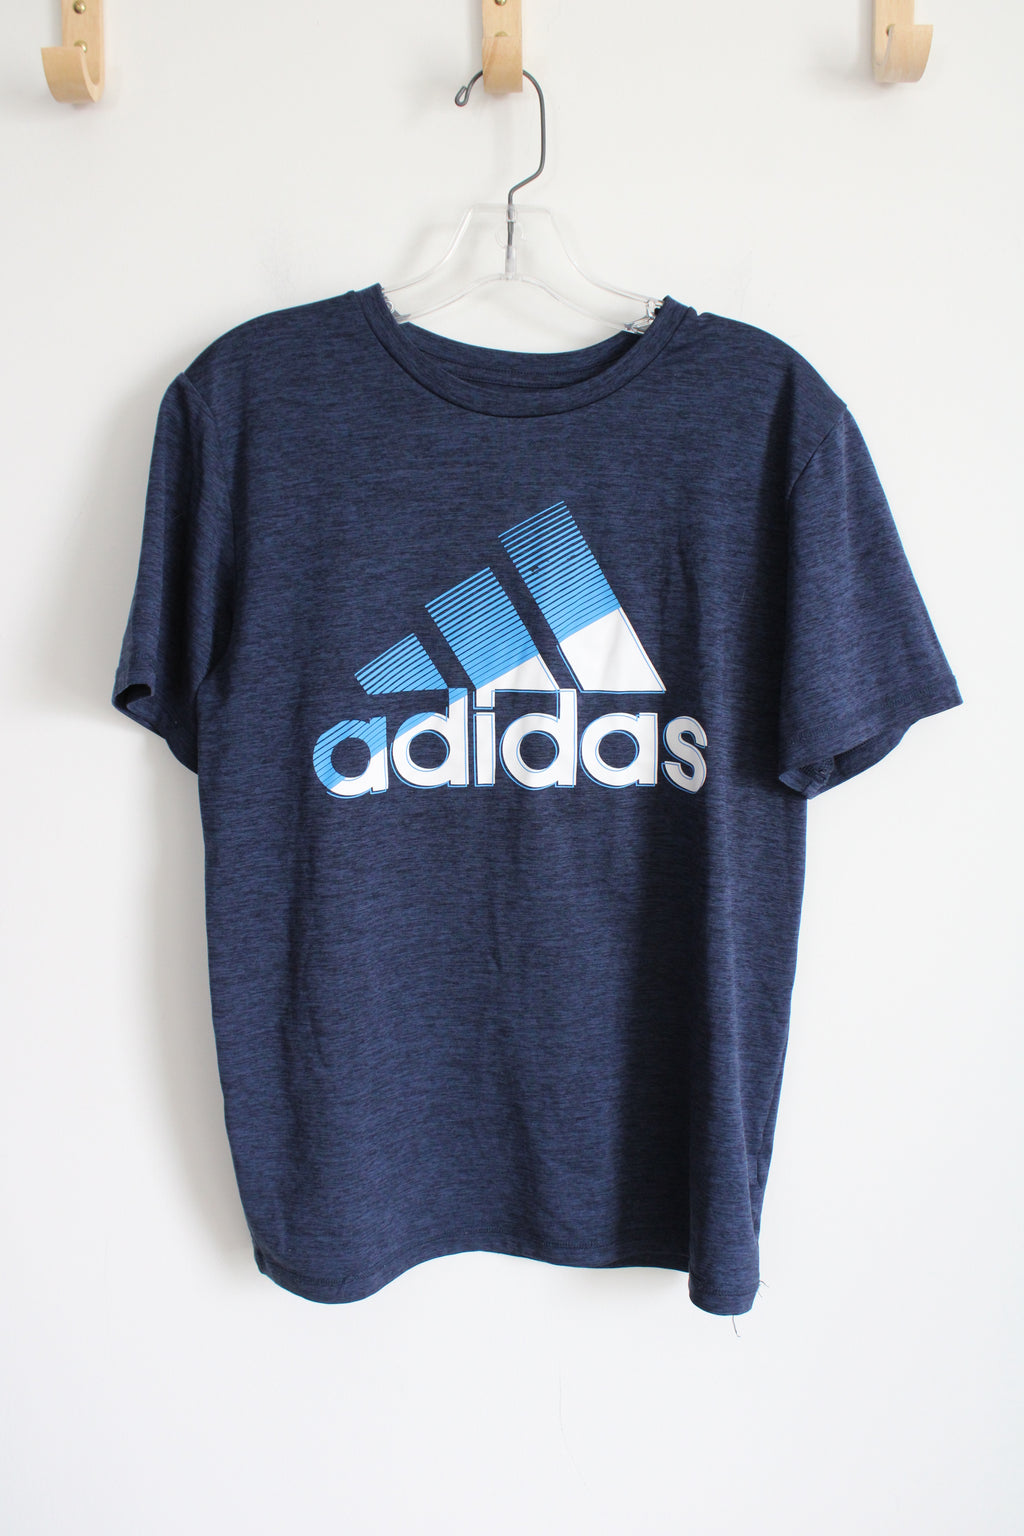 Adidas Dark Navy Blue Logo Shirt | Youth L (14/16)